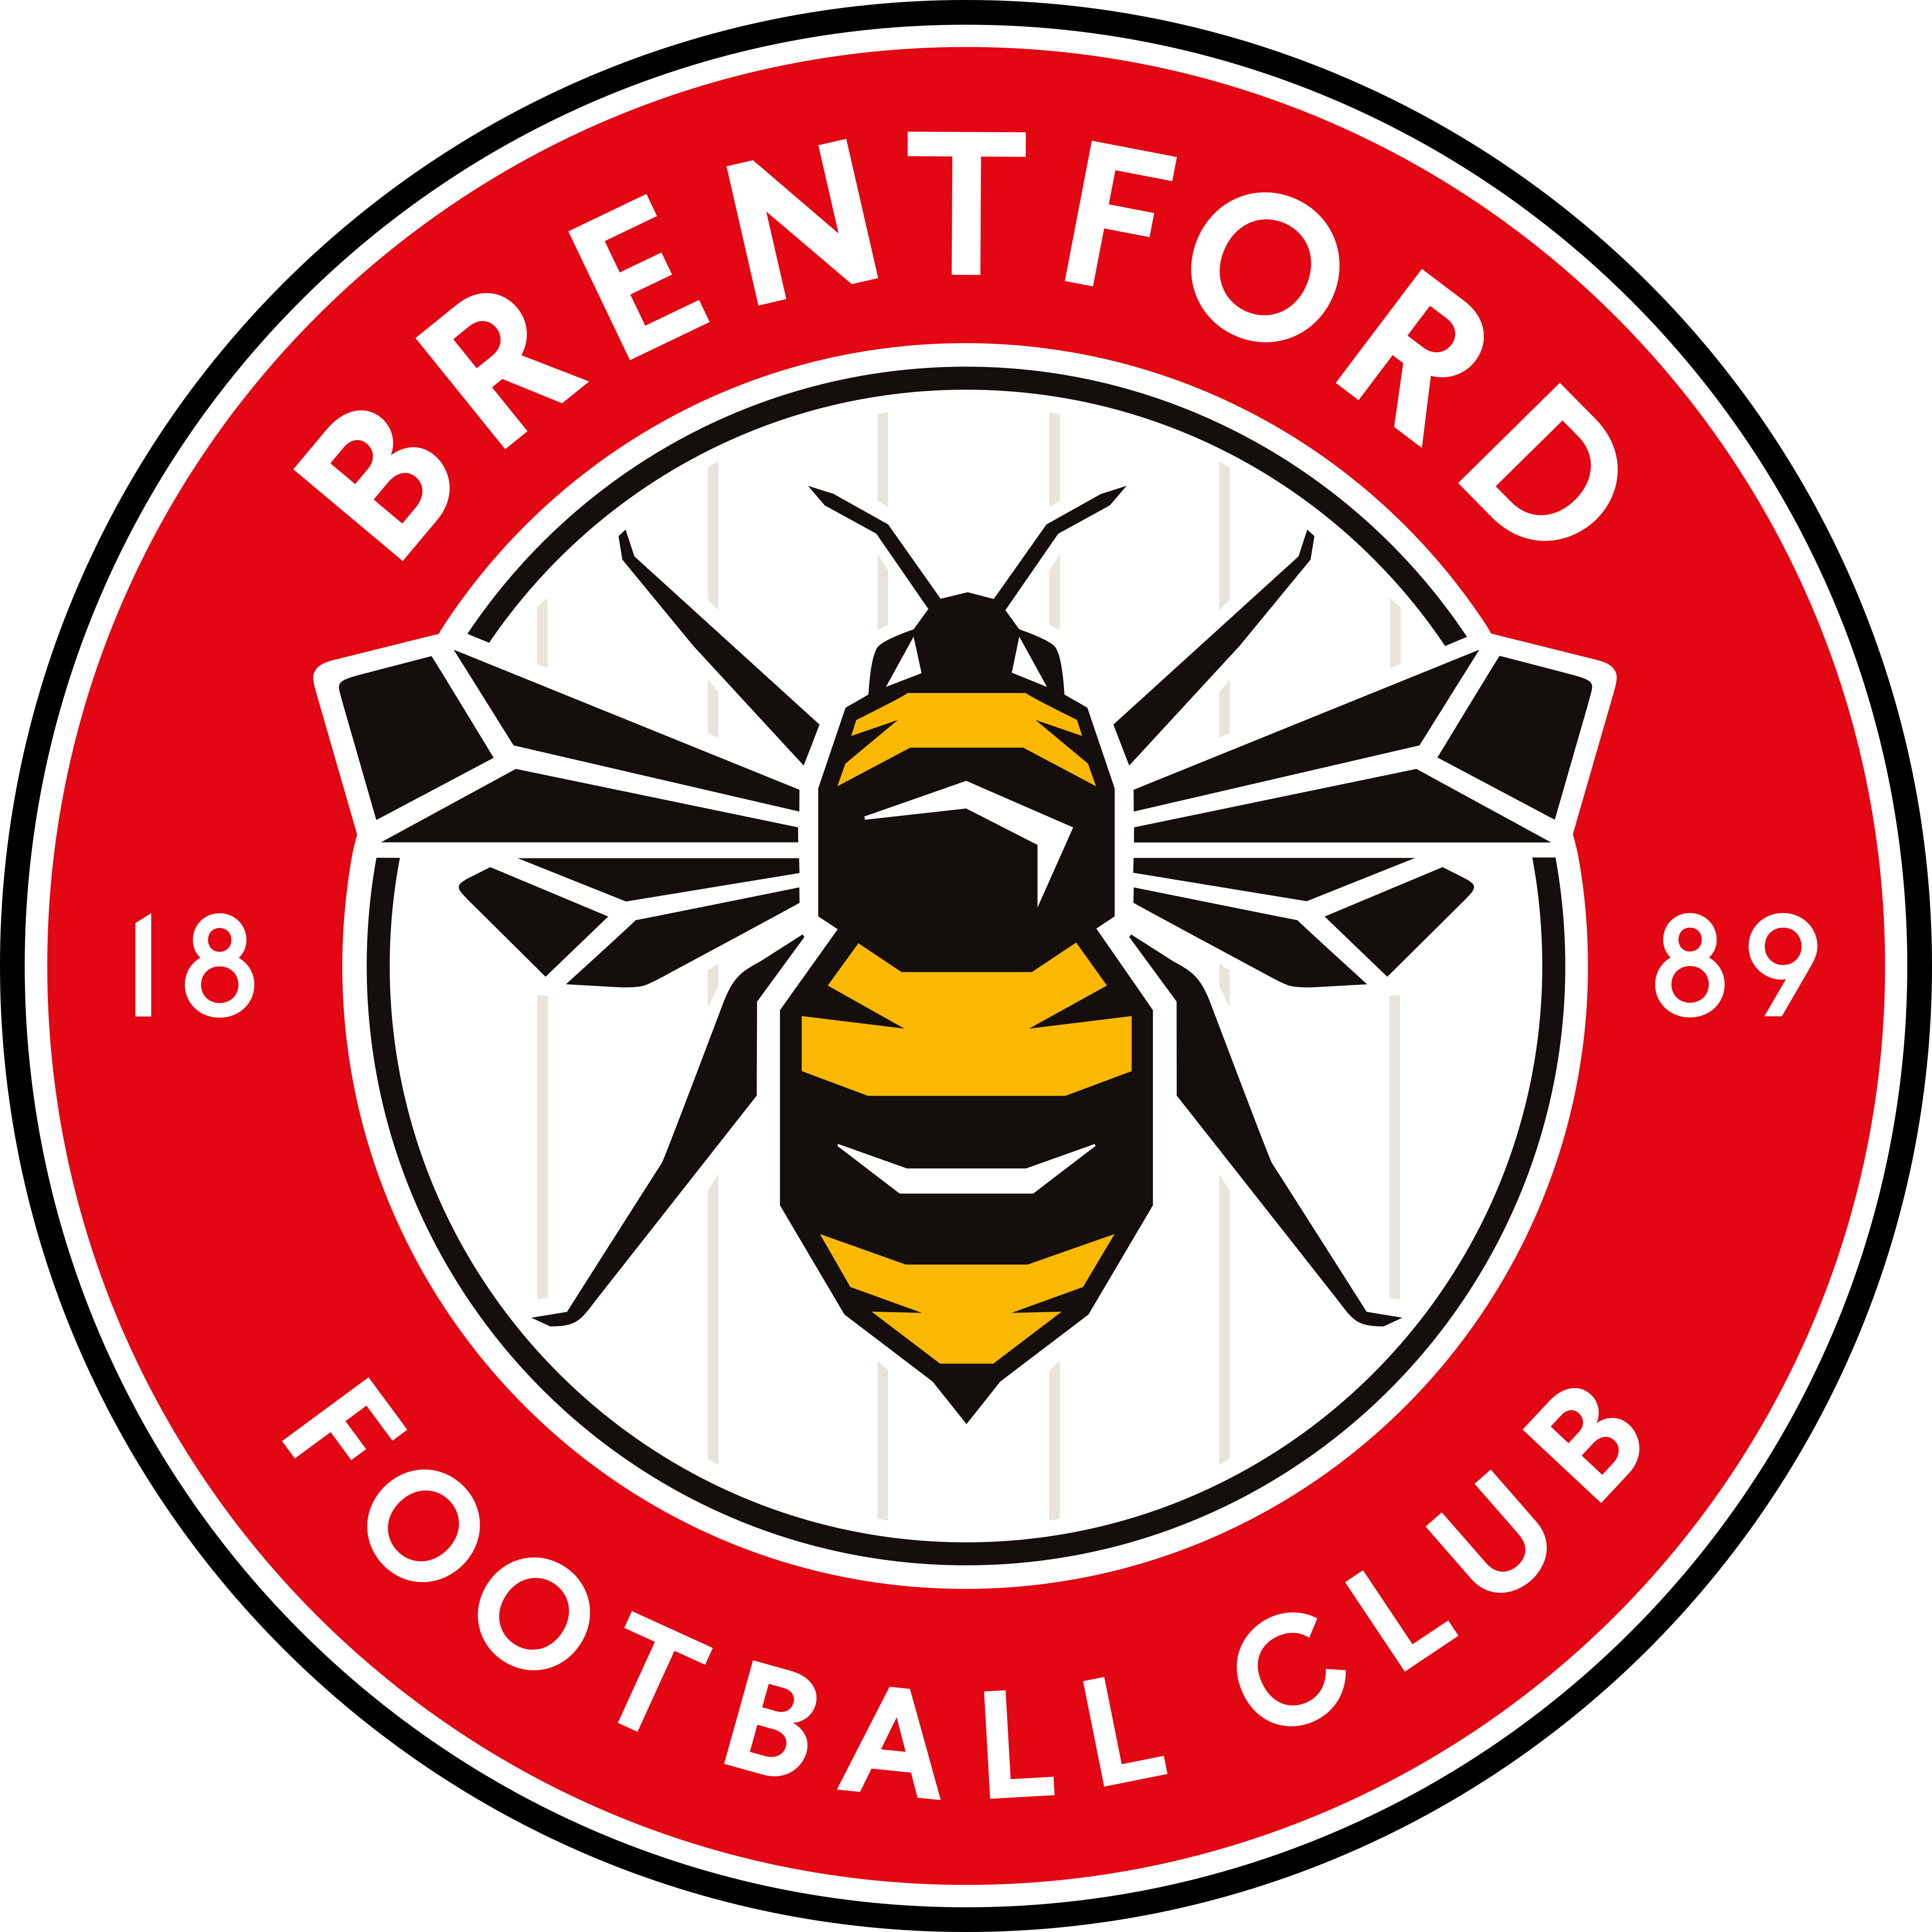 brentford fc logo - Brentford FC Logo